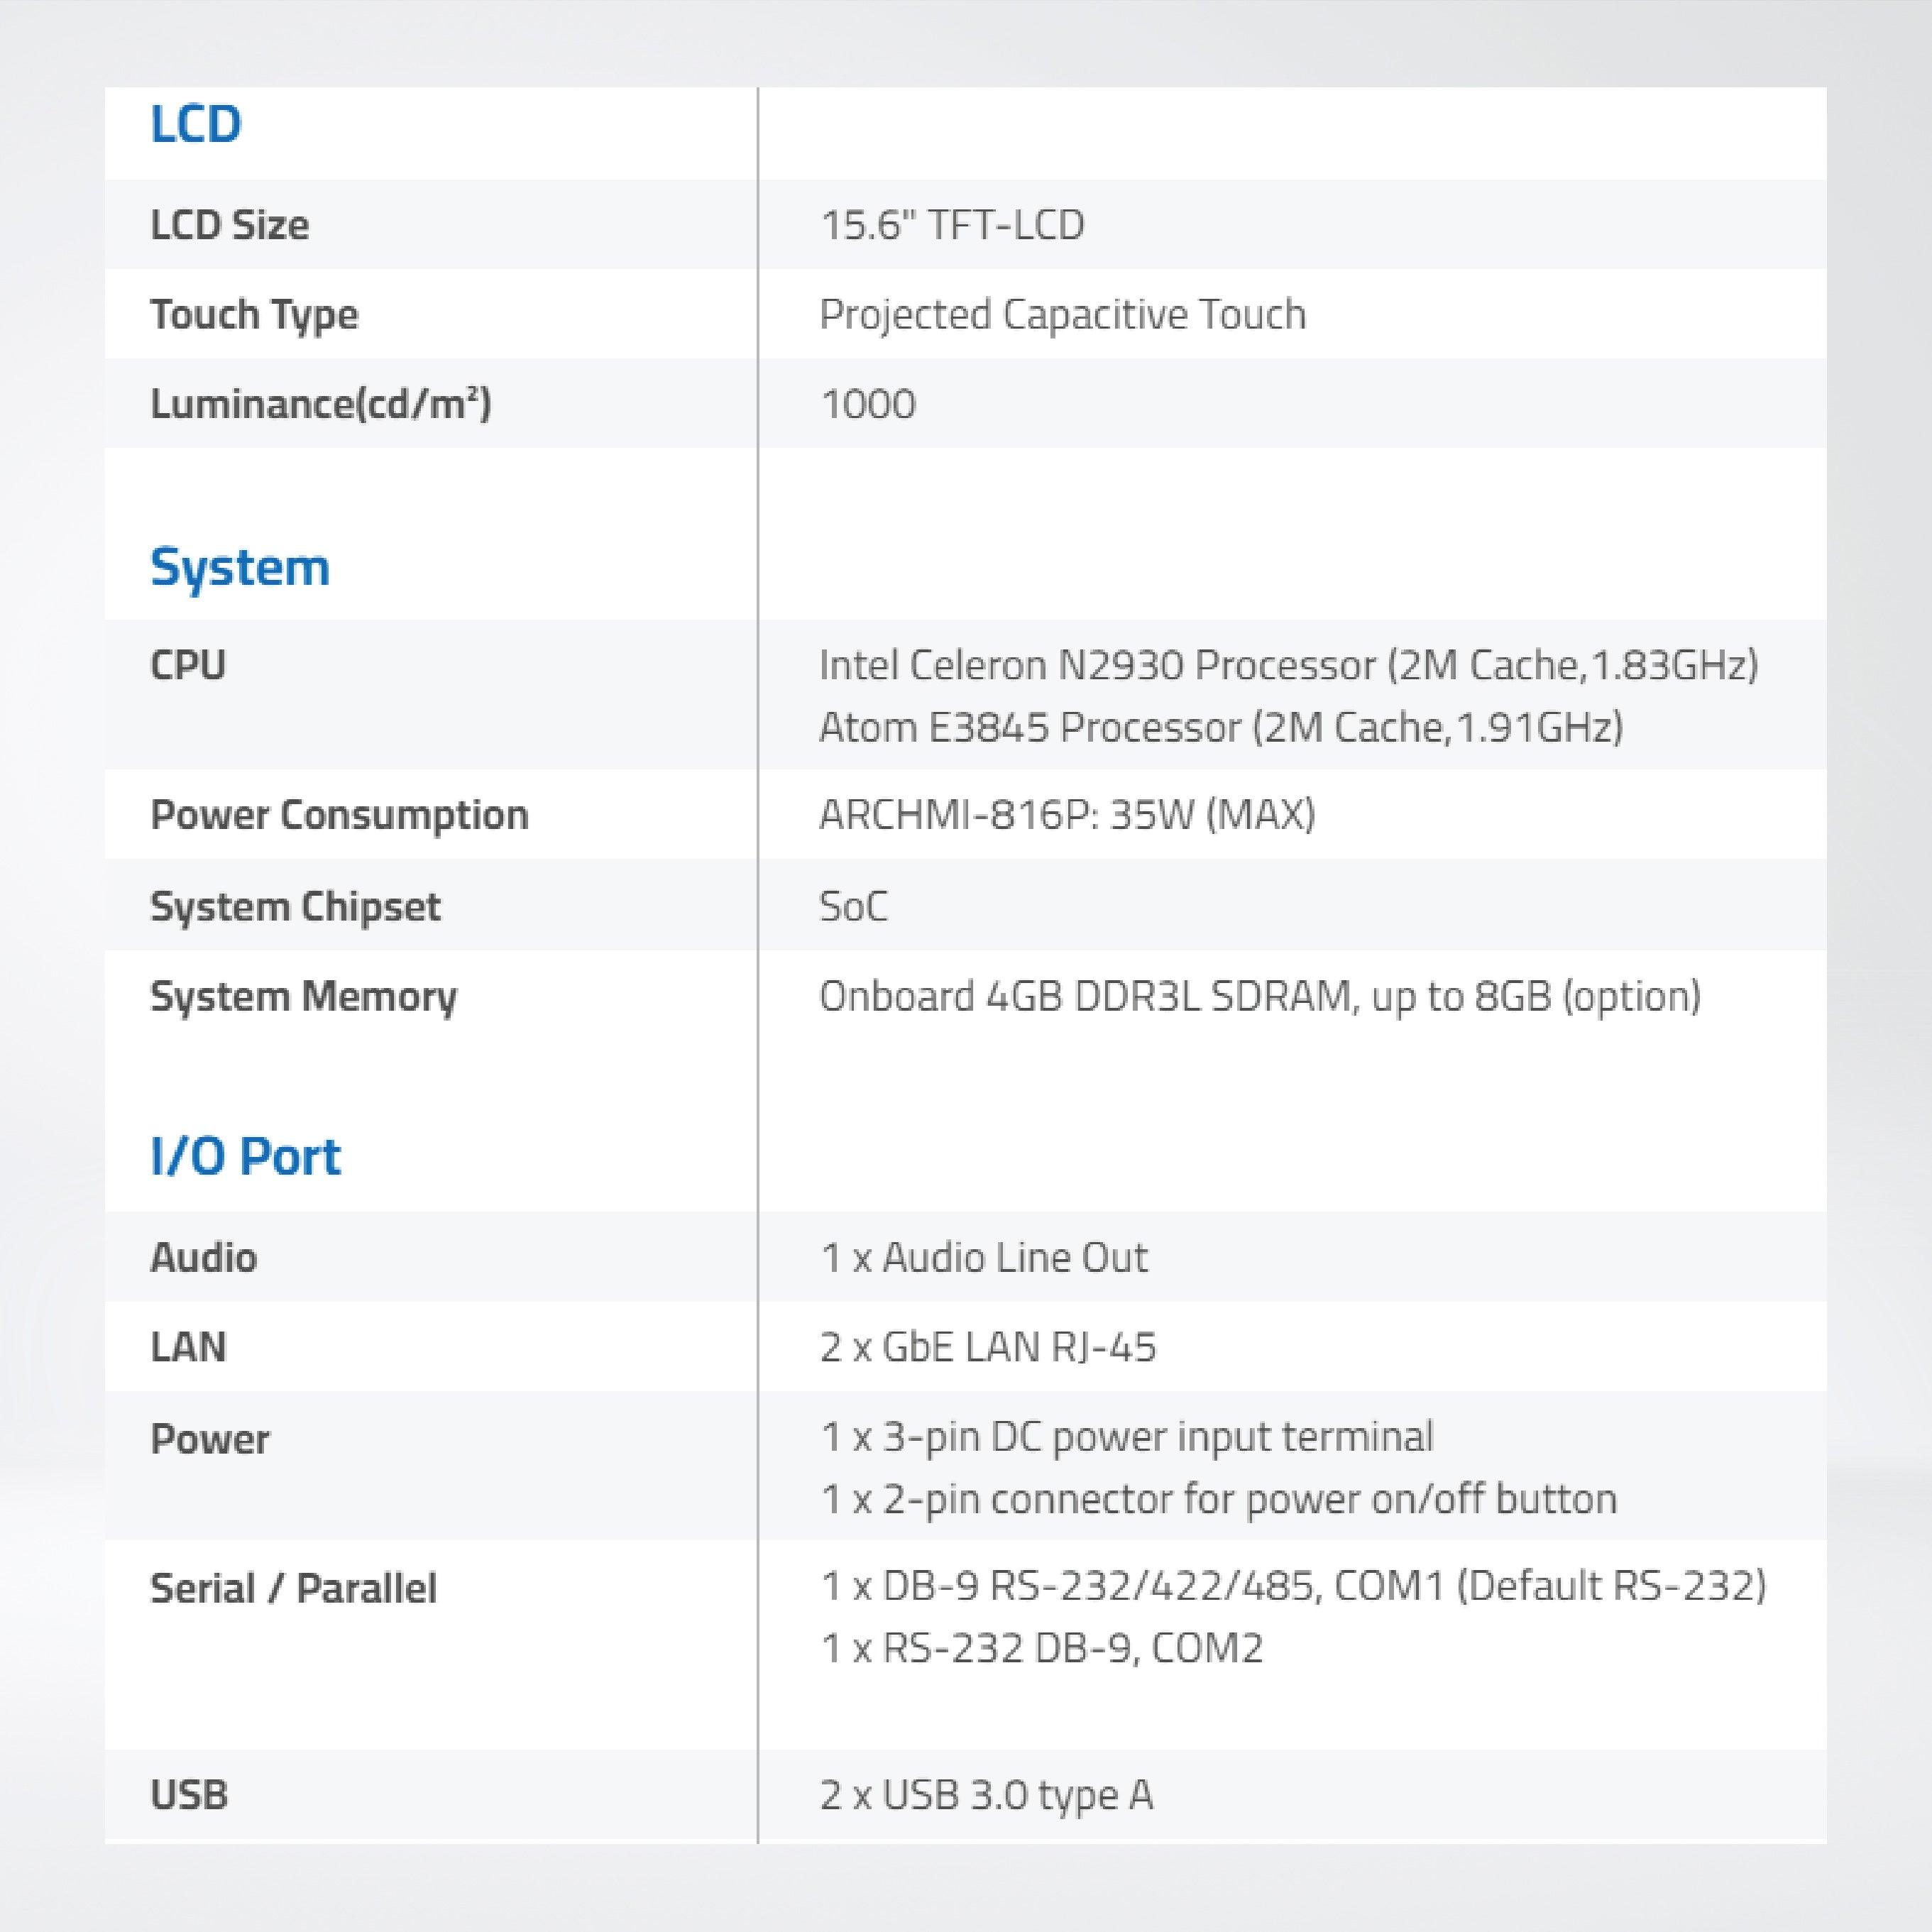 ARCHMI-816PH 15.6" Intel Celeron N2930/ Atom E3845, Fanless Industrial Compact Size Panel PC - Riverplus